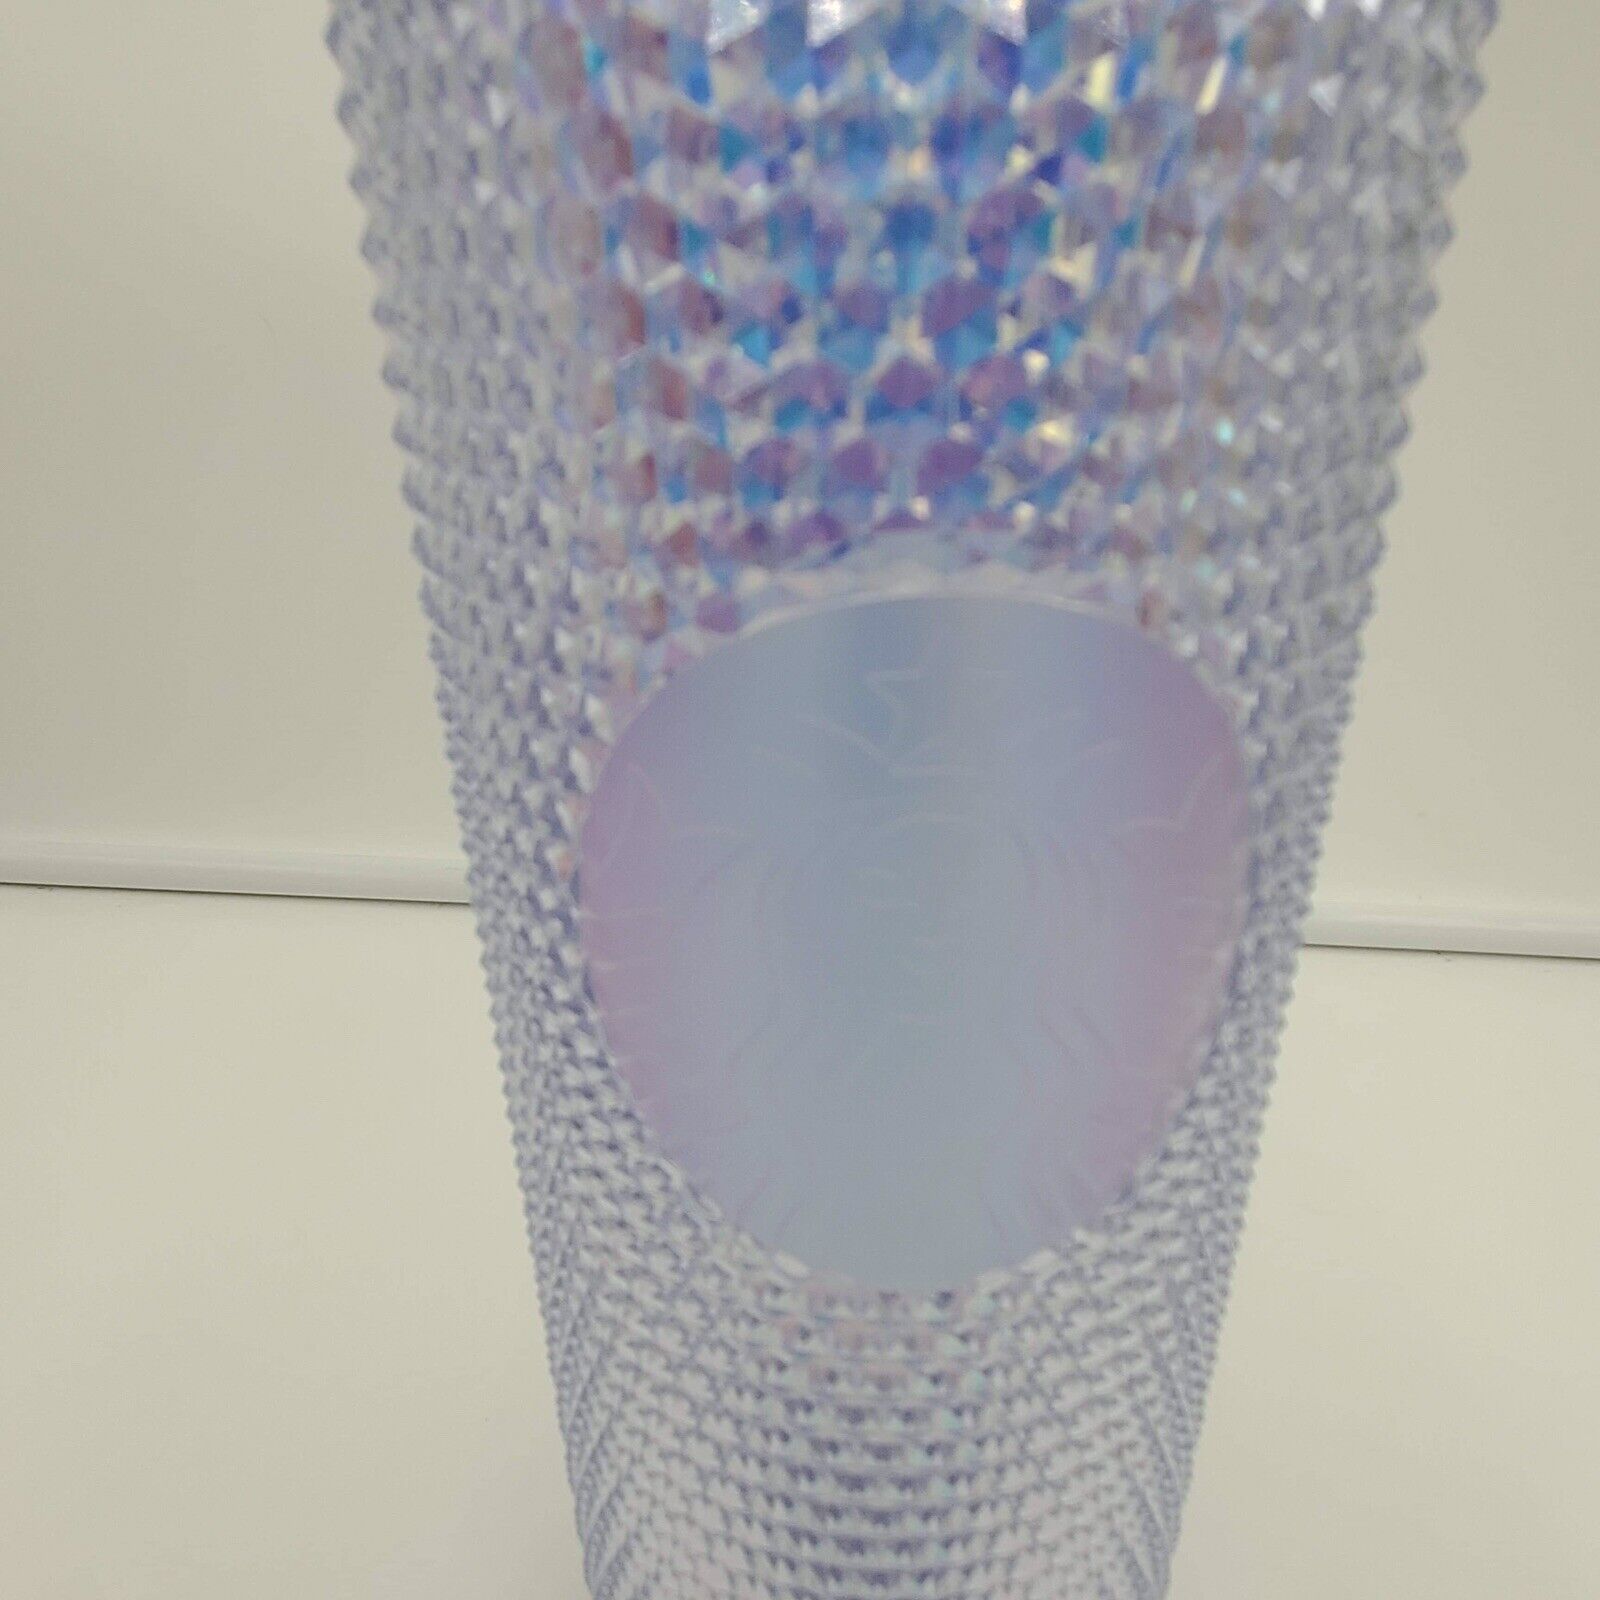 Starbucks Studded Tumbler Mug Plastic Silver Iridescent Cup Europe 24oz New  2020